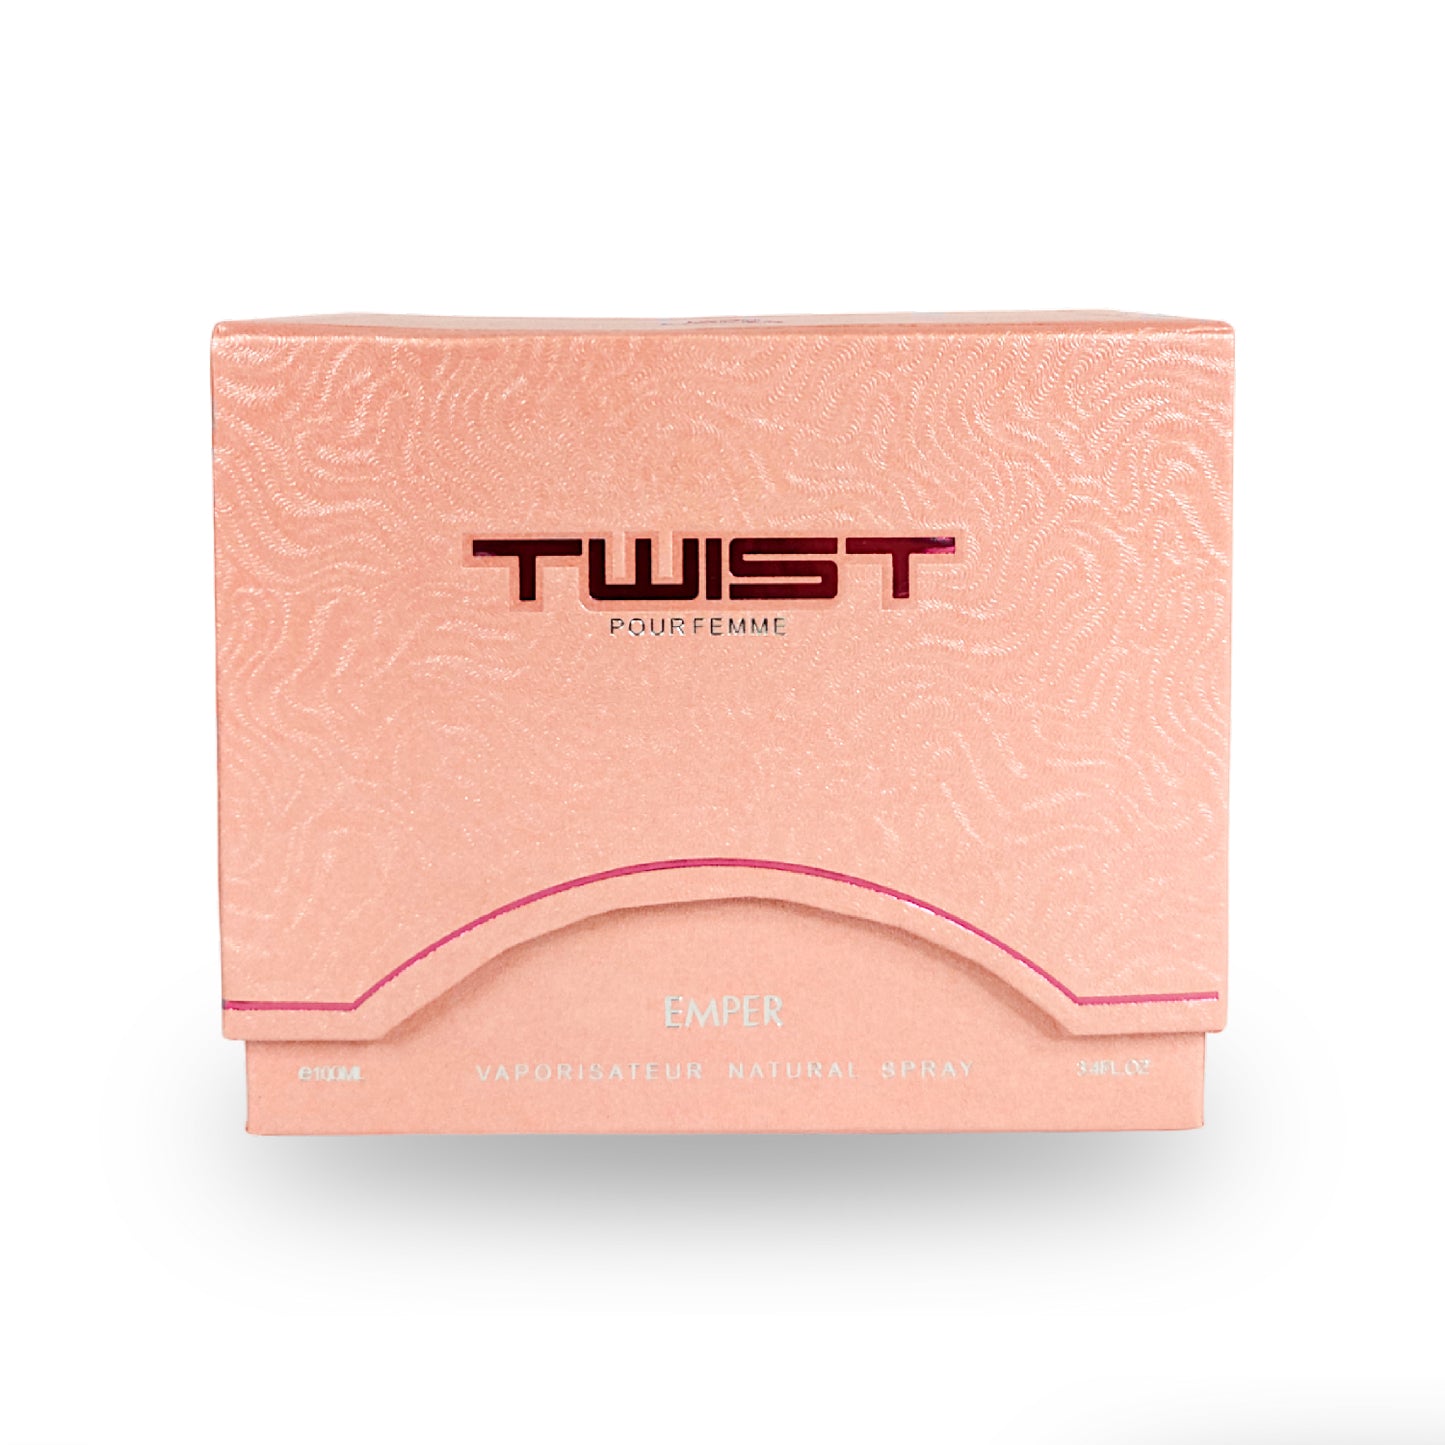 TWIST For Women Perfume 100 ml - POUR FEMME